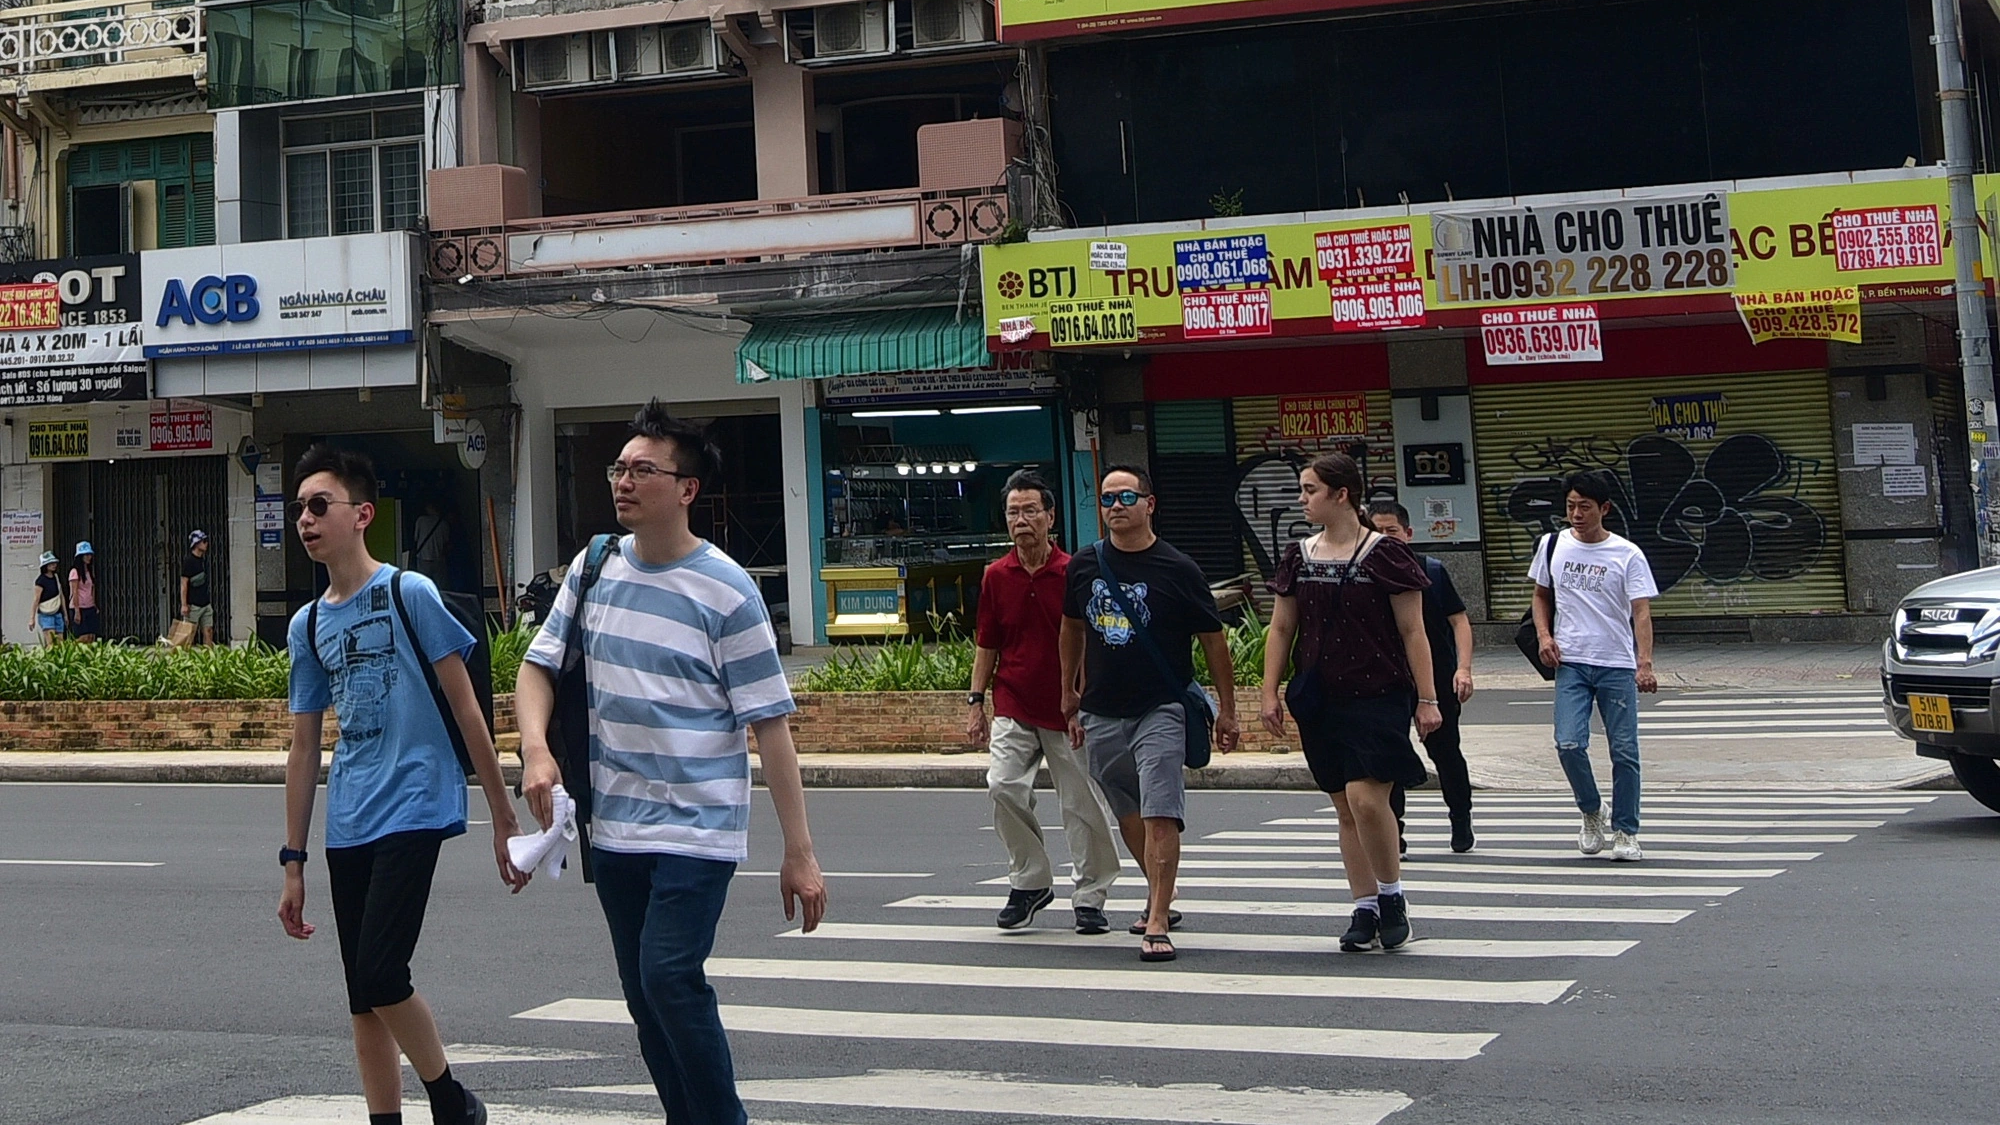 OP-ED: Yielding to pedestrians is an atypical practice in Vietnam